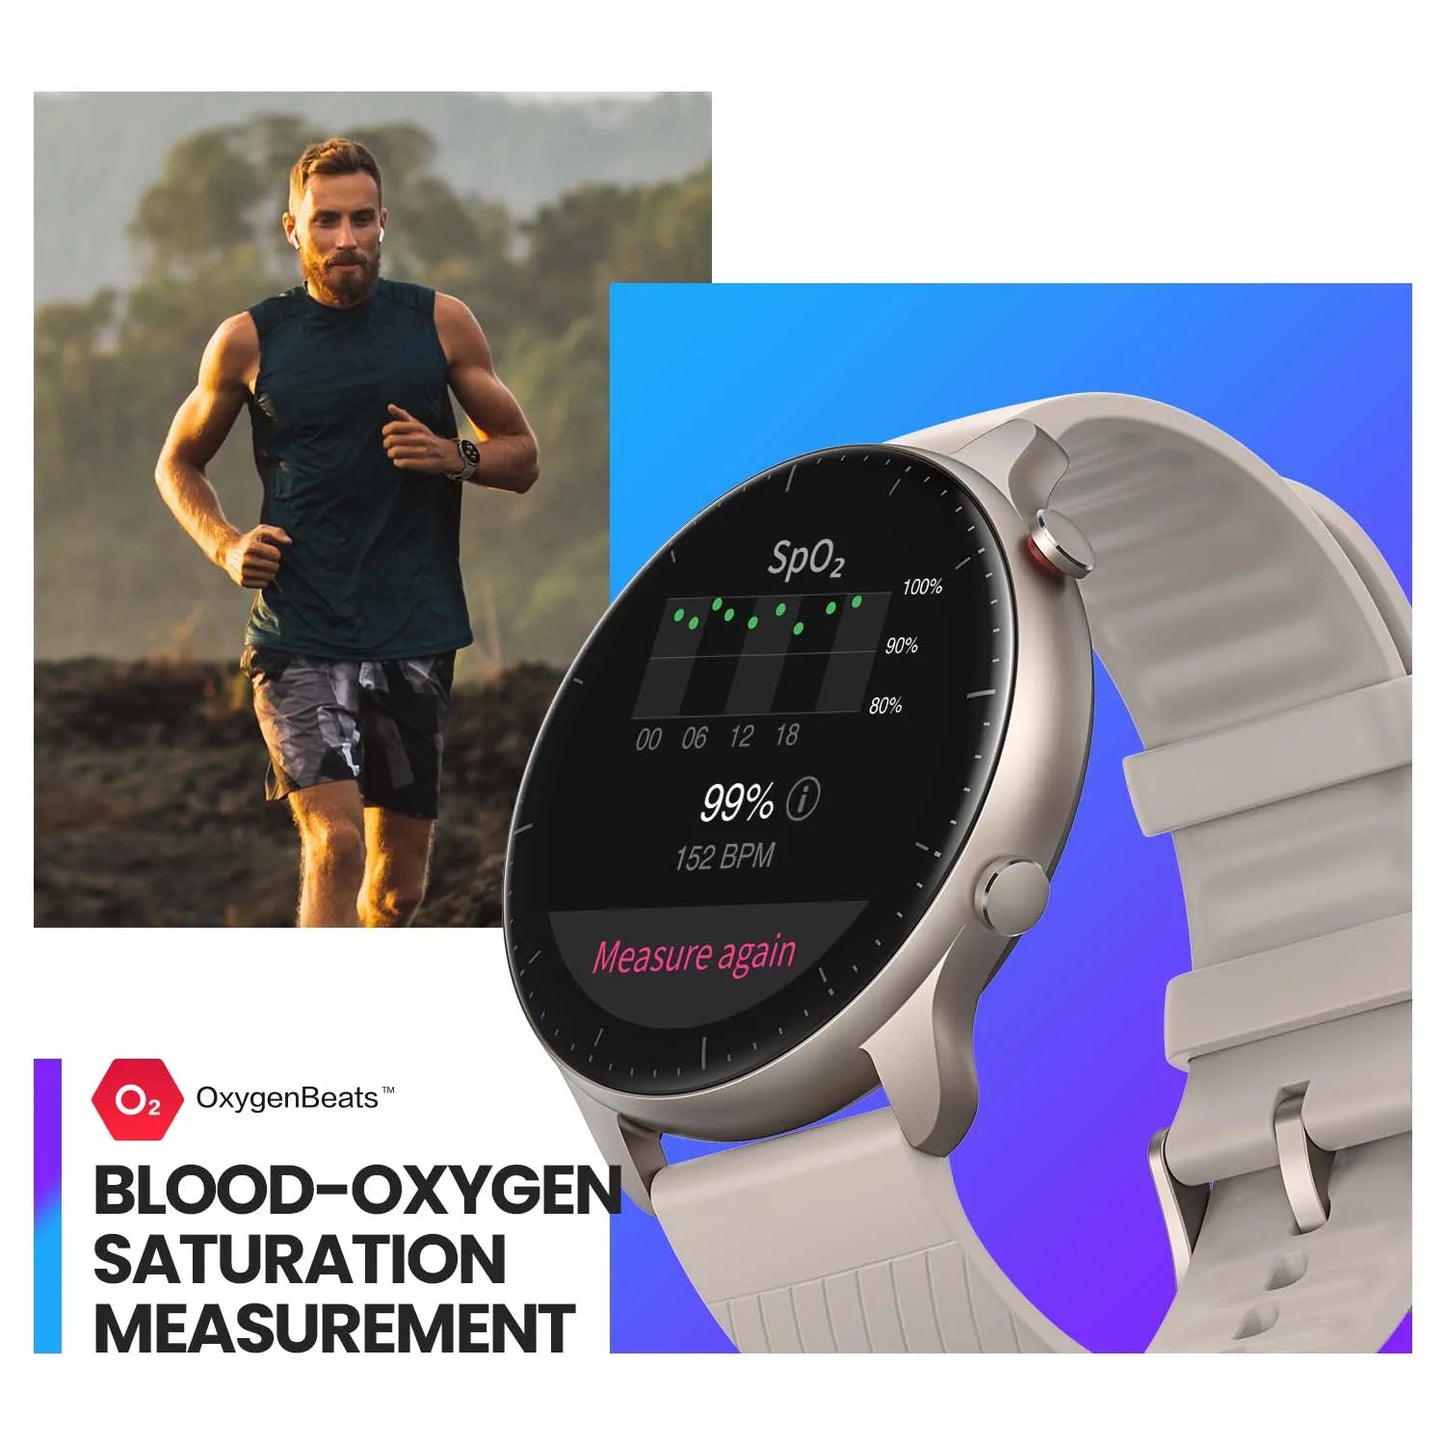 Amazing Fit GTR 2 Smartwatch with Alexa Built-in, Bezel-less Design, Ultra-long Battery Life - Smart Watch Fun